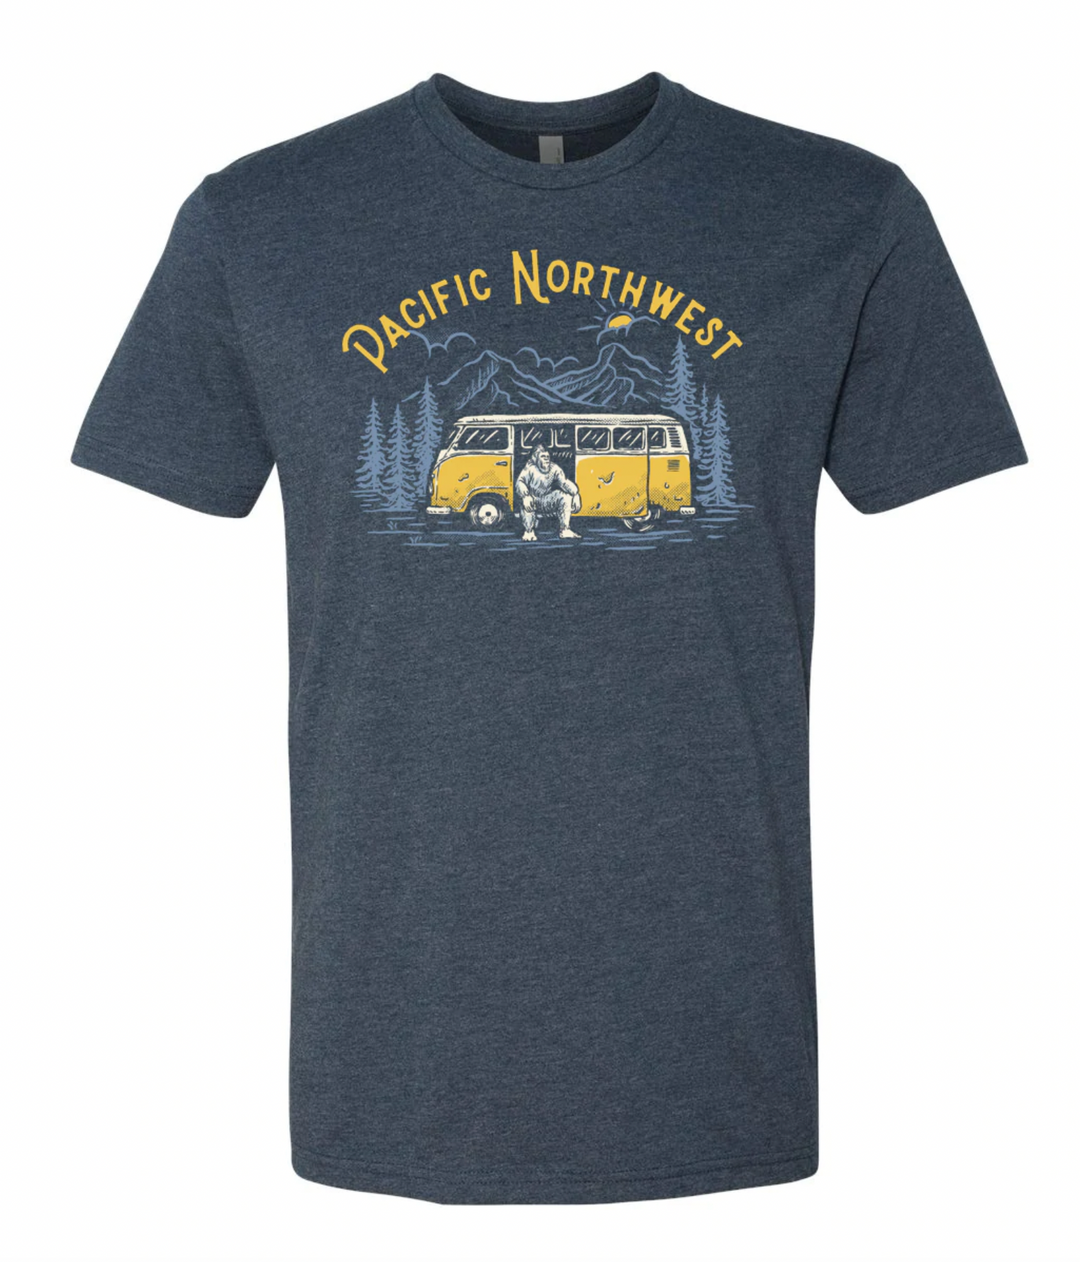 The Sasquatch Bus T-Shirt